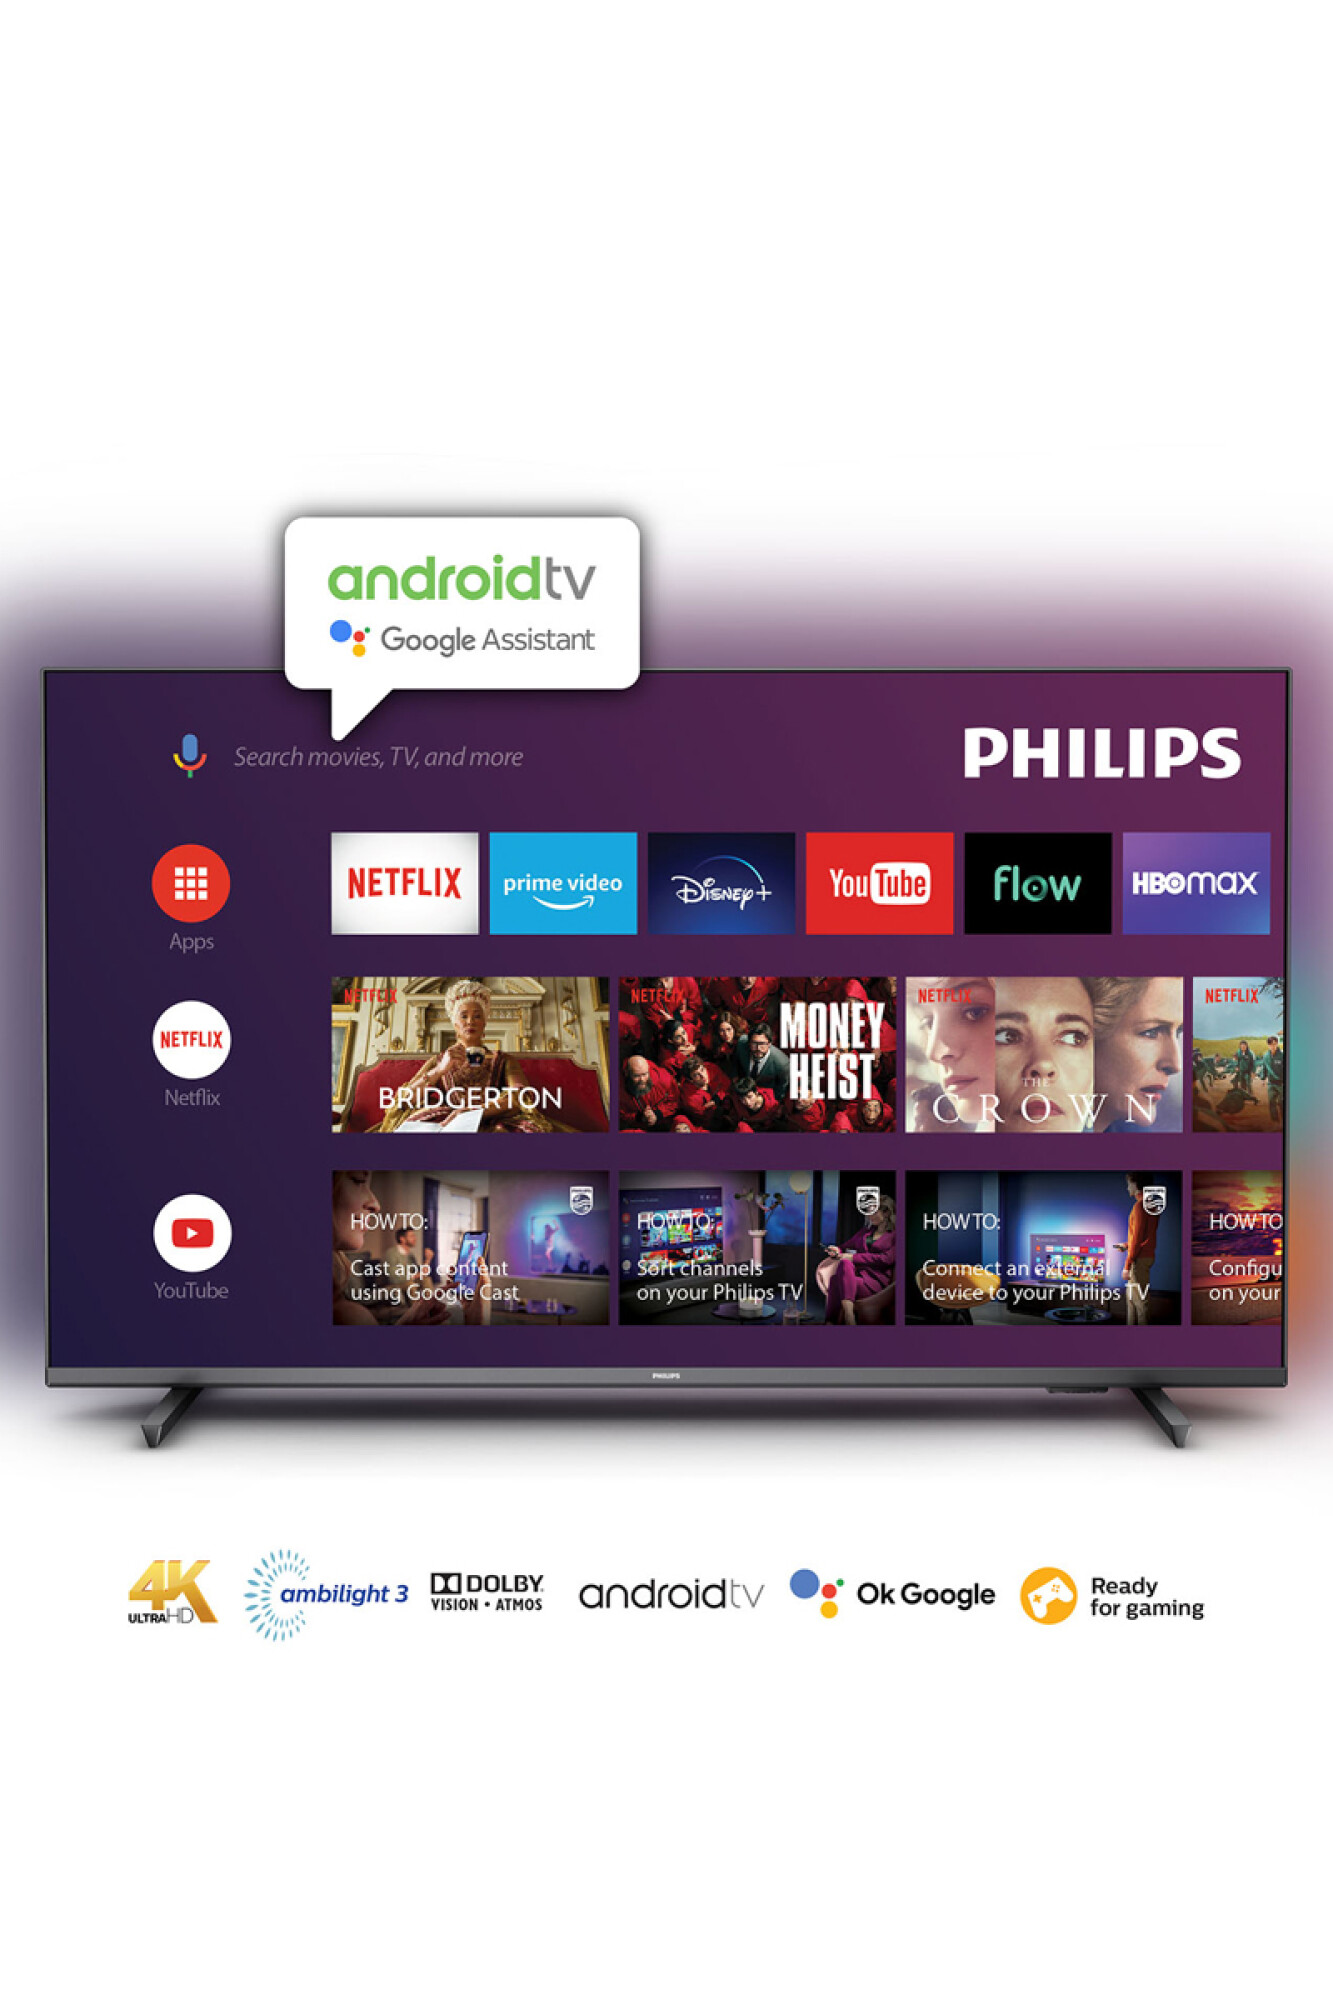 Smart Tv Philips 55 55PUD7906/55 Android Ambilight Uhd - 001